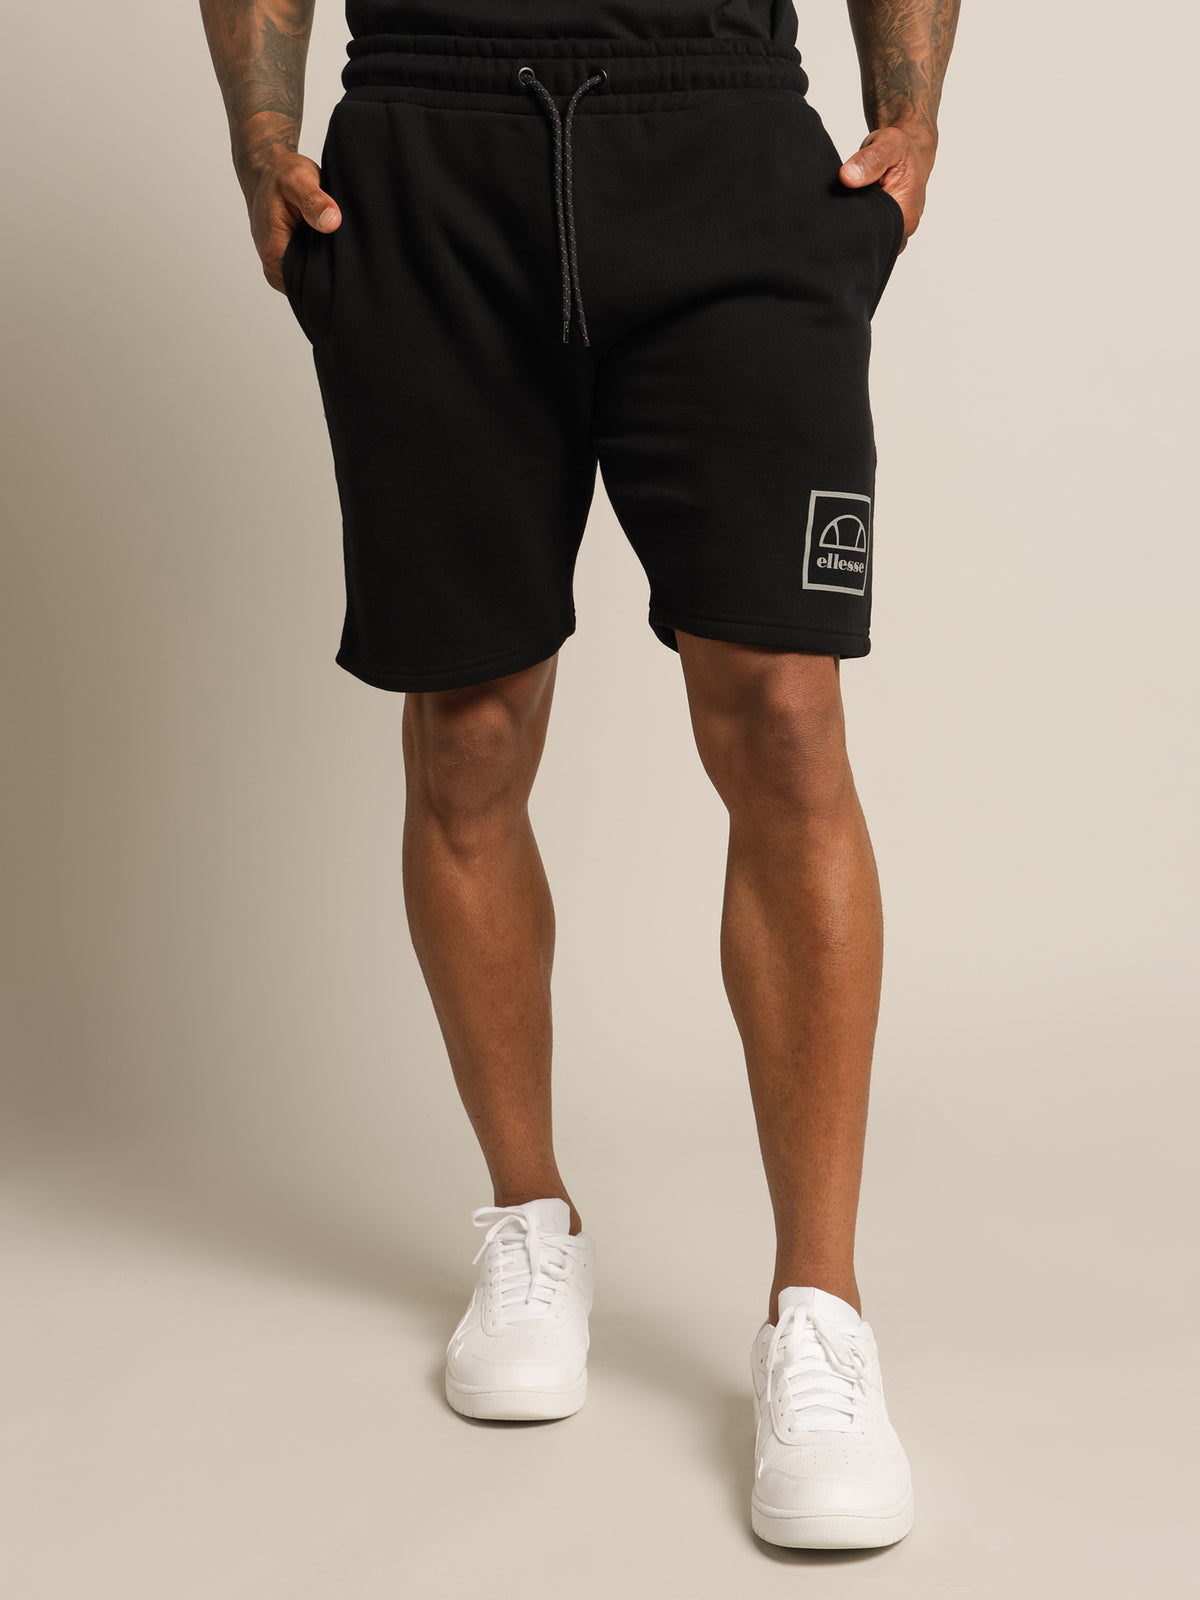 Orlando Shorts in Black